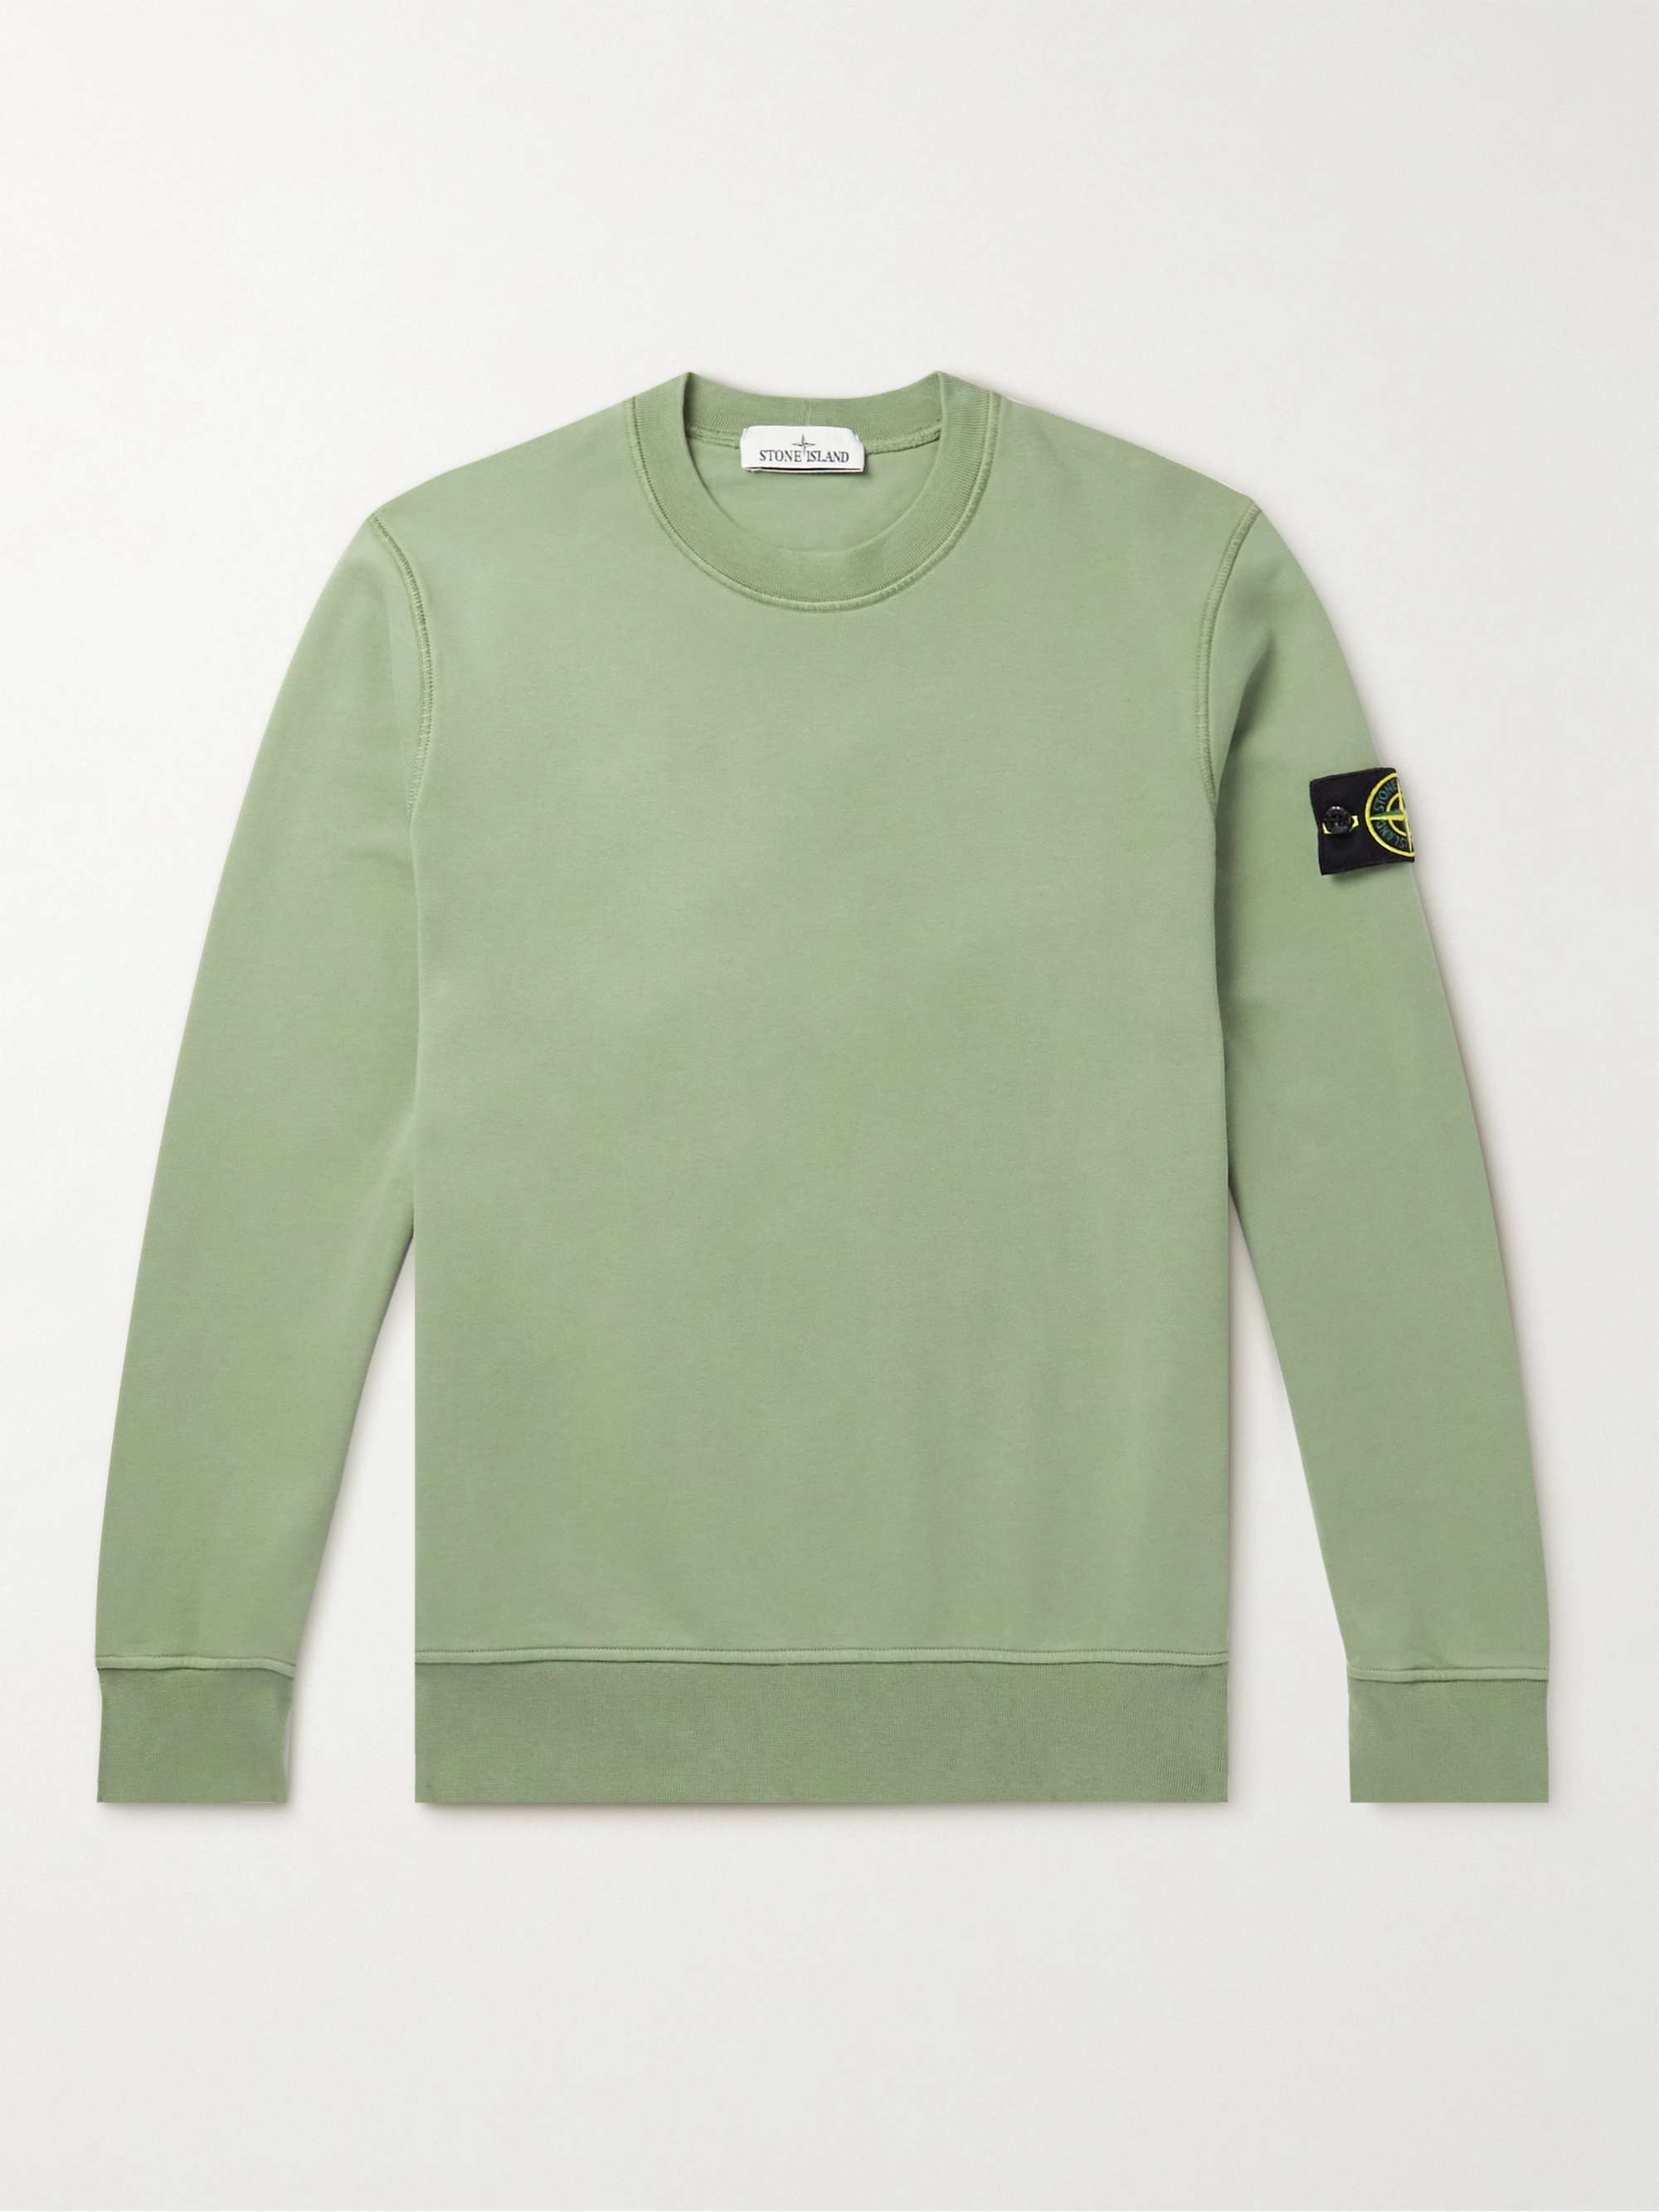 STONE ISLAND Logo-Appliqued Garment-Dyed Cotton-Jersey Sweatshirt,Green